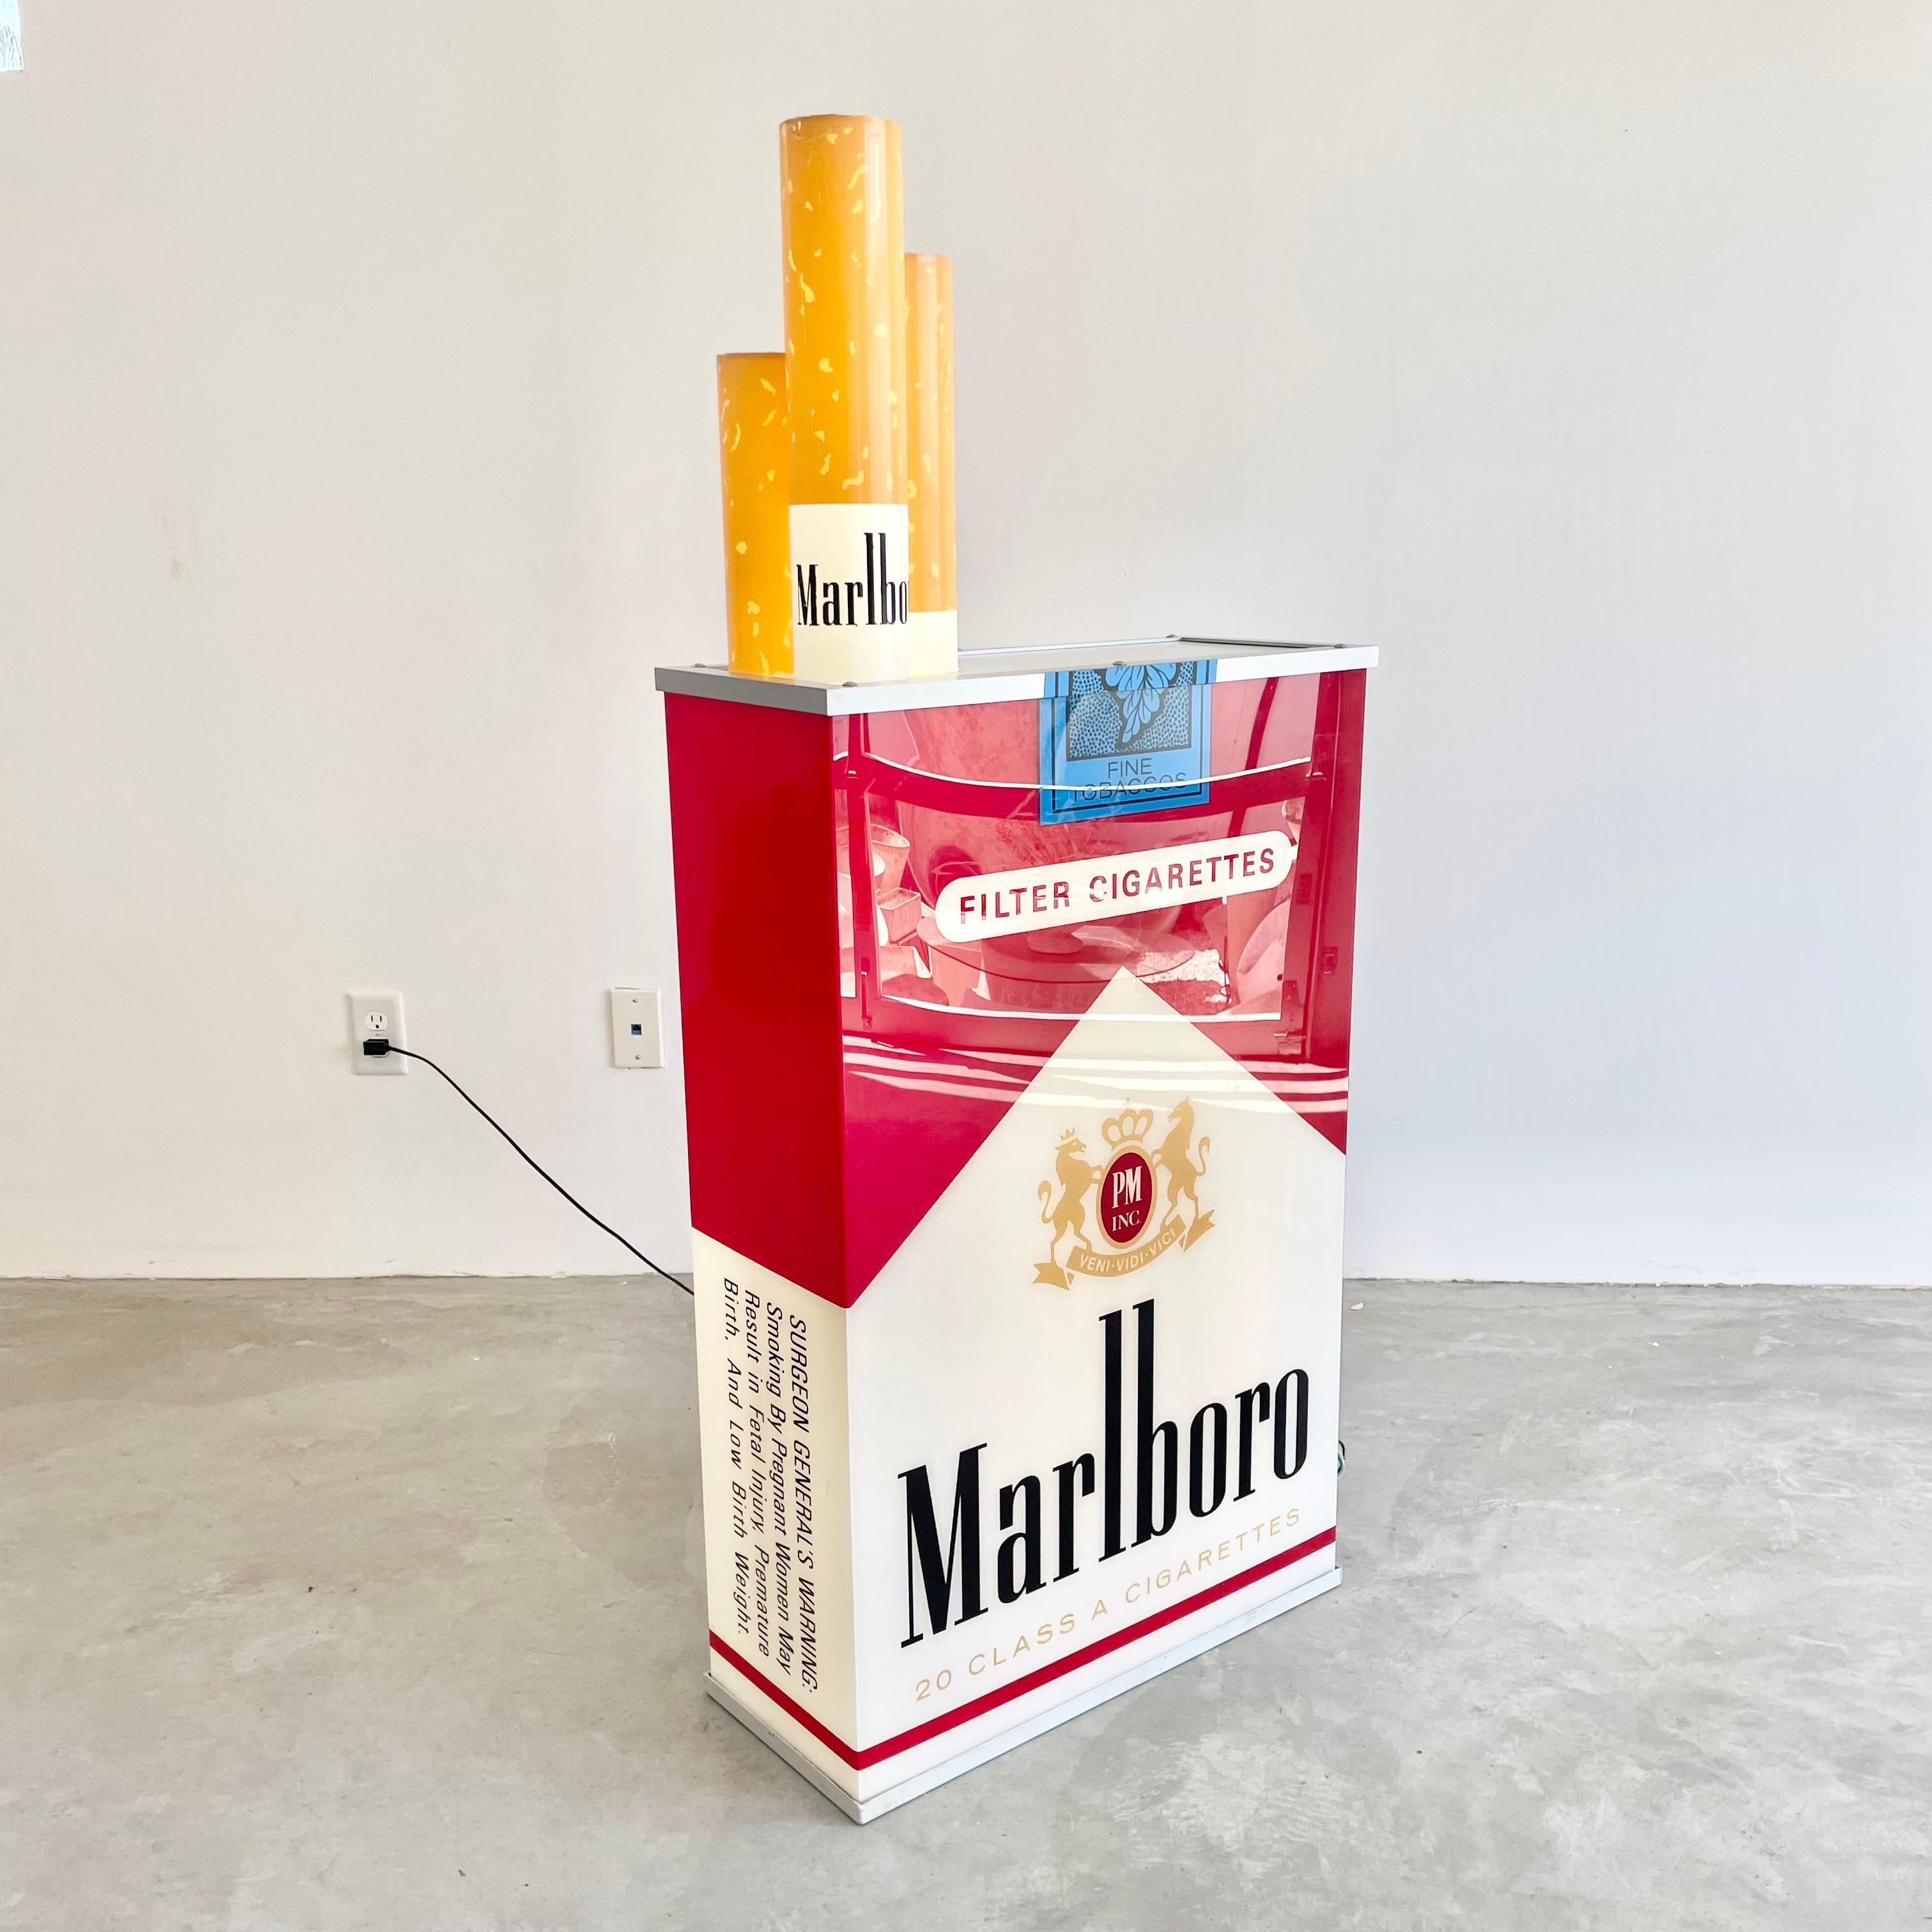 Steel Massive Double Sided Vintage Marlboro Light Up Cigarette Pack